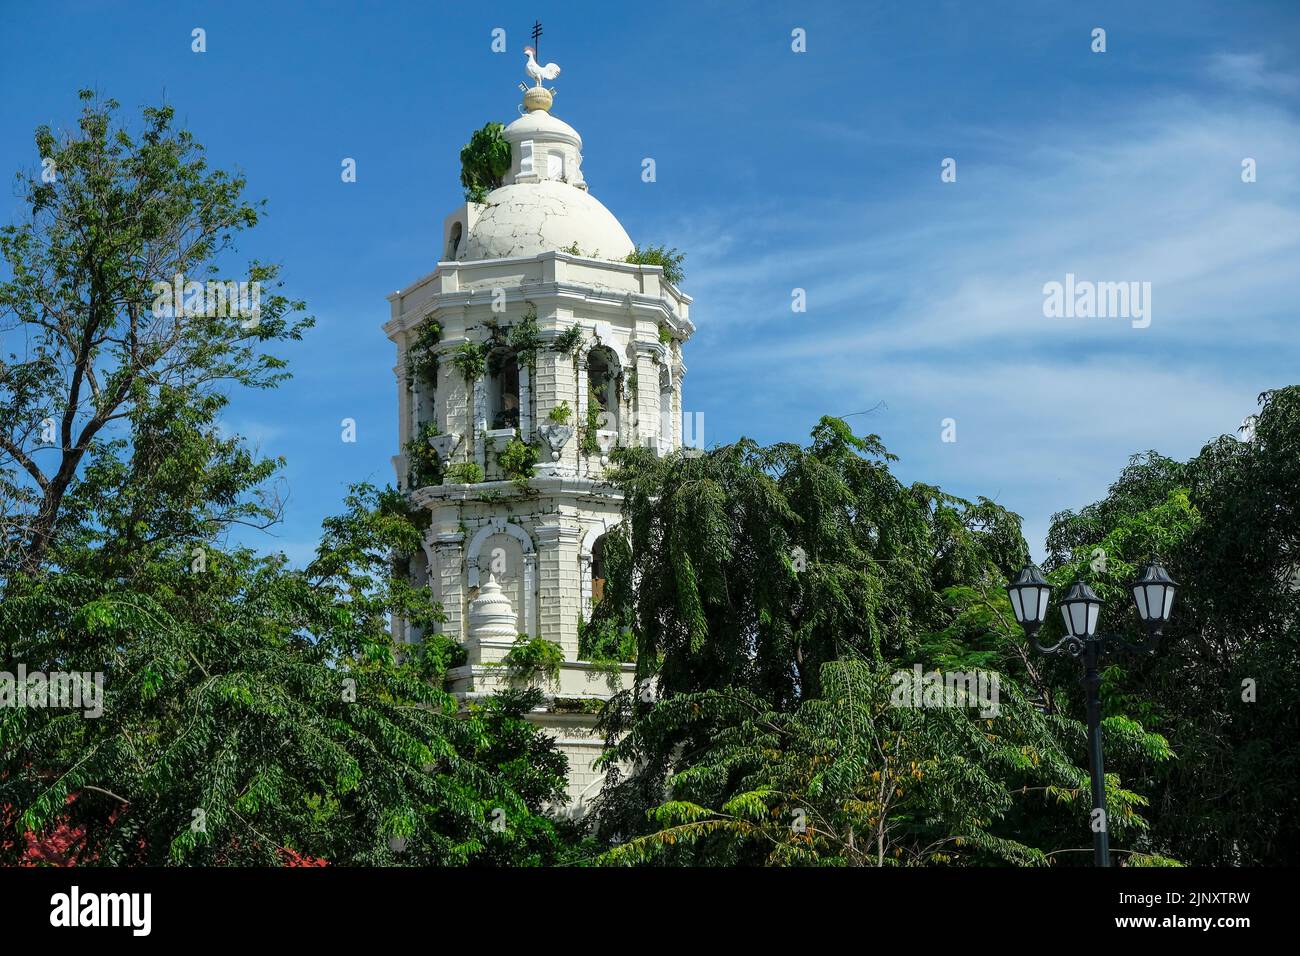 Glockenturm der Metropolitan Cathedral of Saint Paul in Vigan, Insel Luzon, Philippinen. Stockfoto